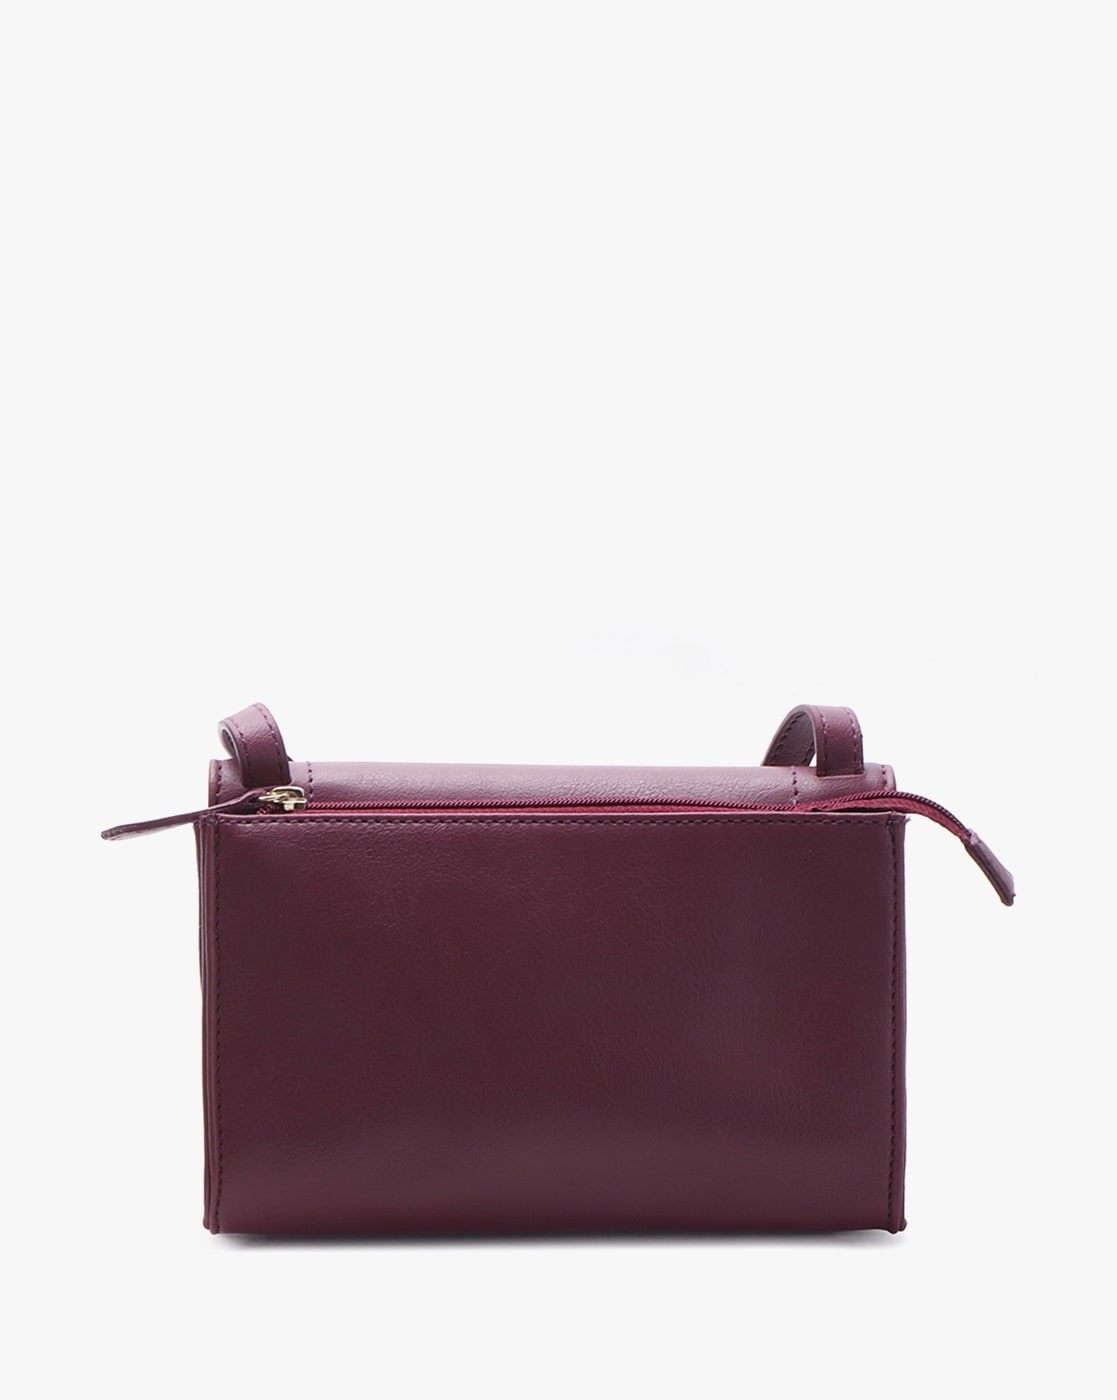 hot sale women burgundy handbags large| Alibaba.com